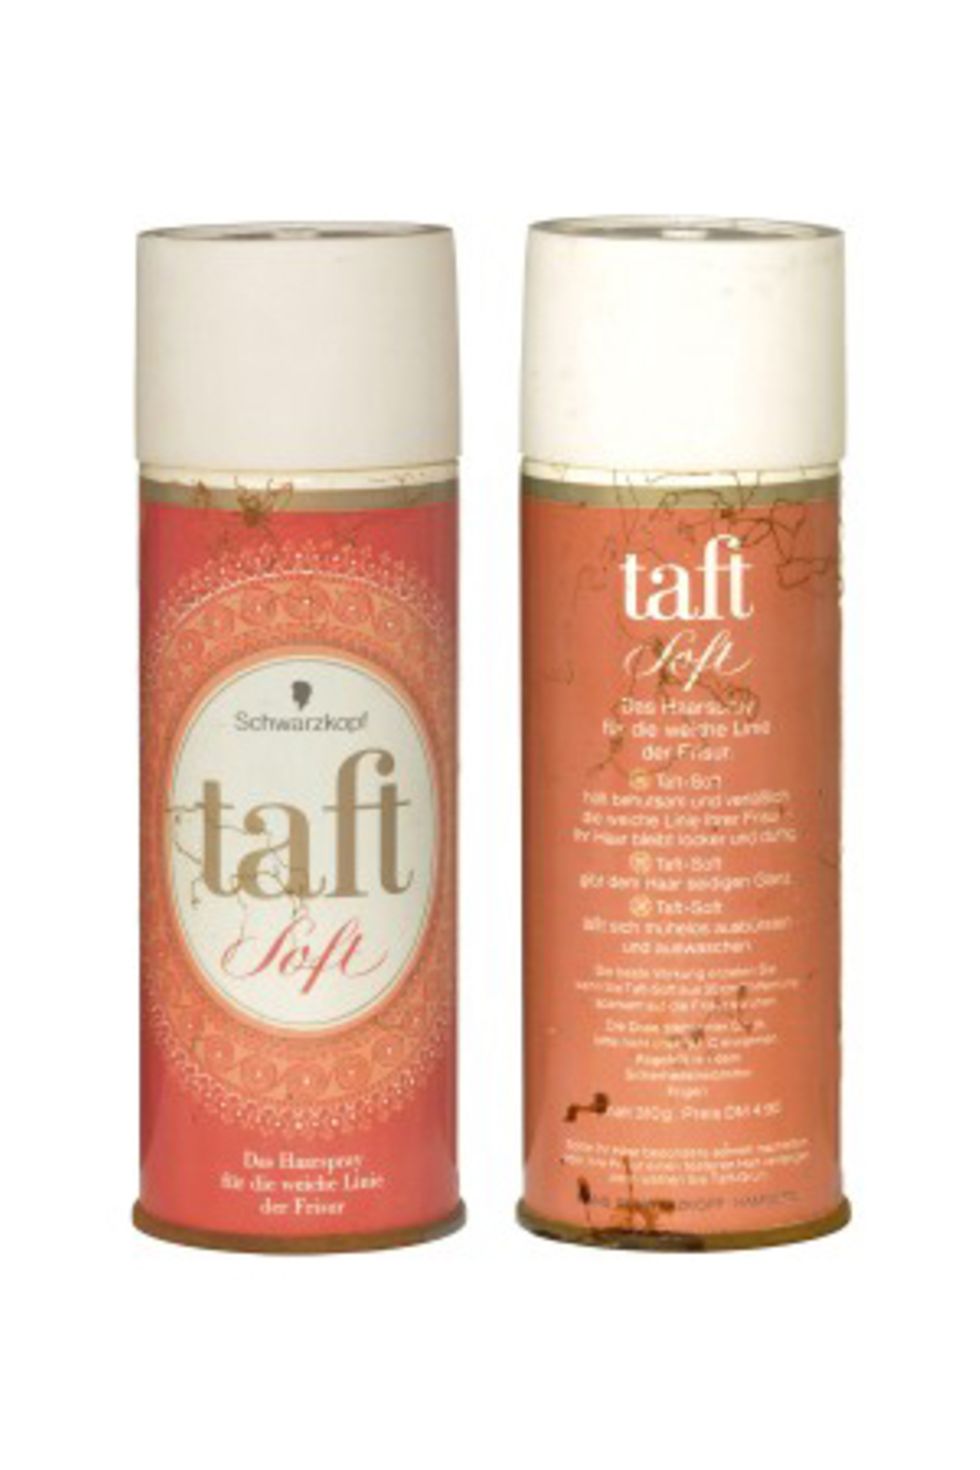 1966 Taft soft